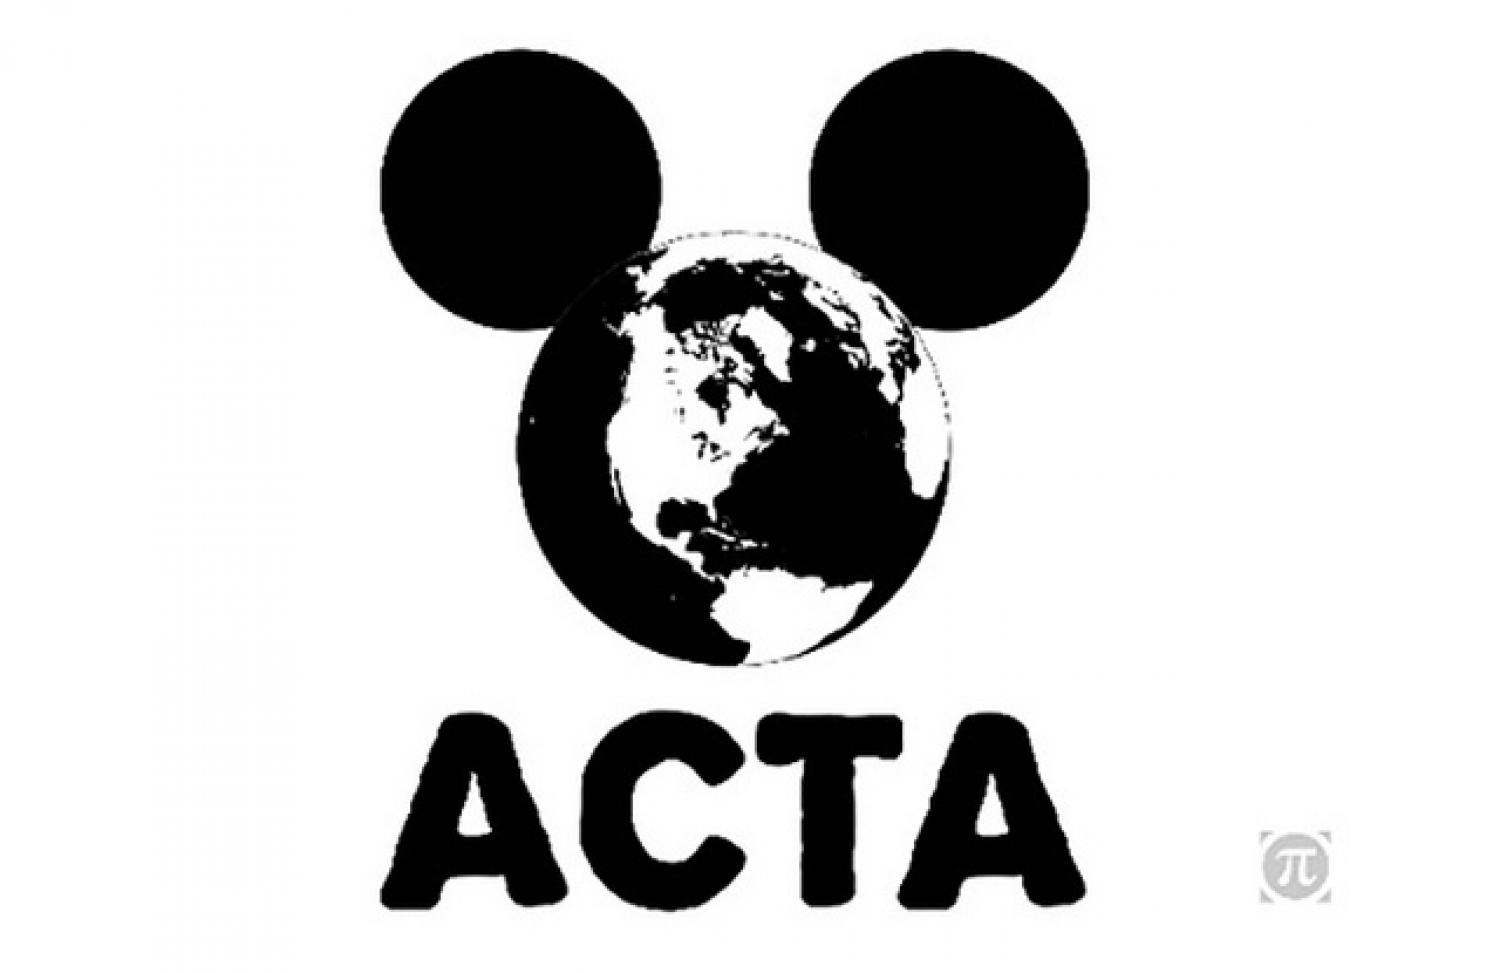 ACTA is not necessary